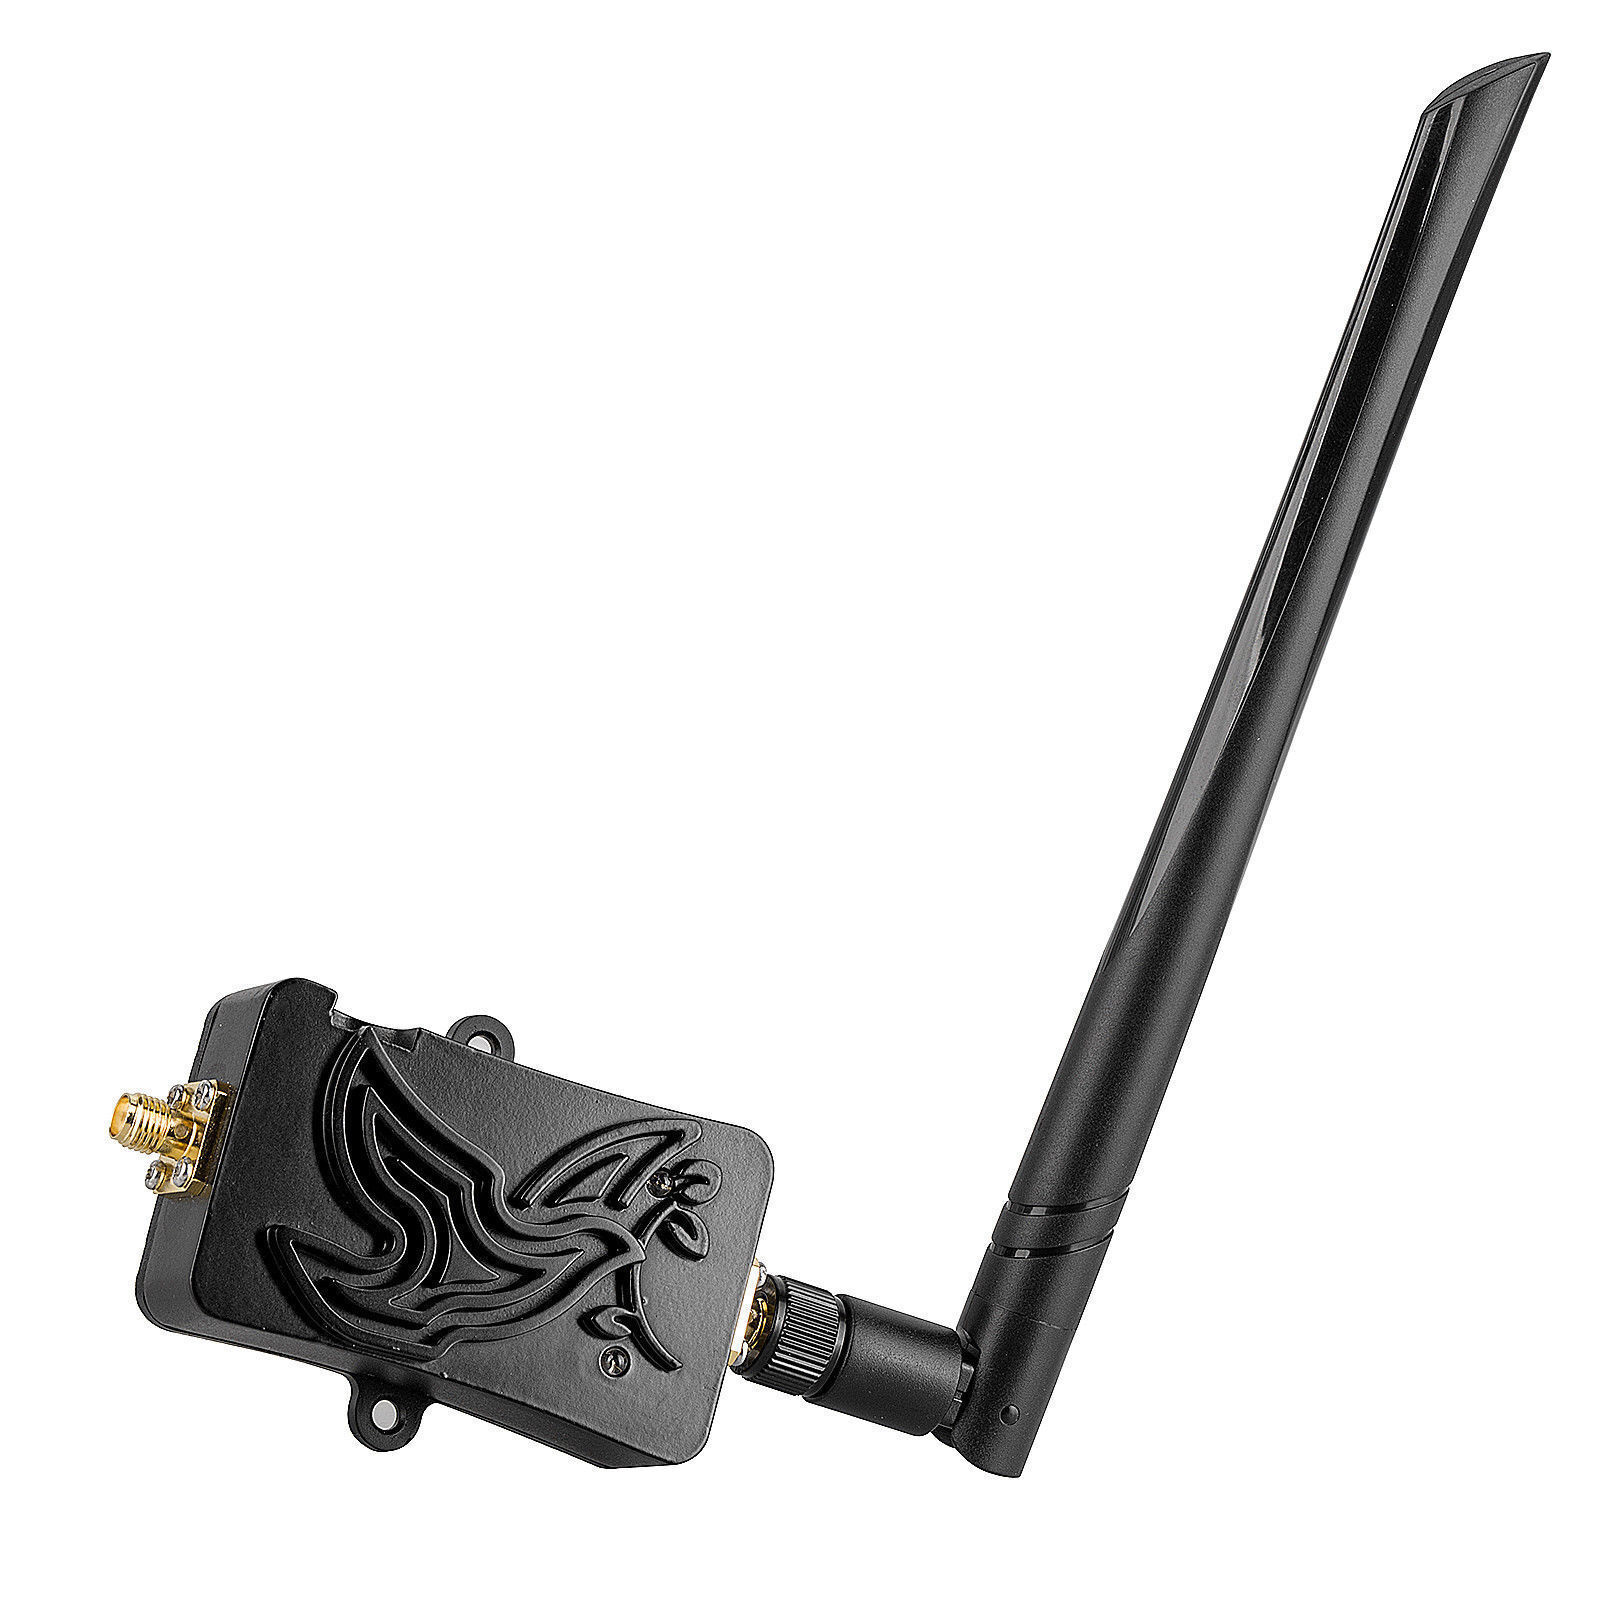 4W 2.4GHz WiFi Booster Wireless Network Coverage Extender Amplifier 6dBi Antenna